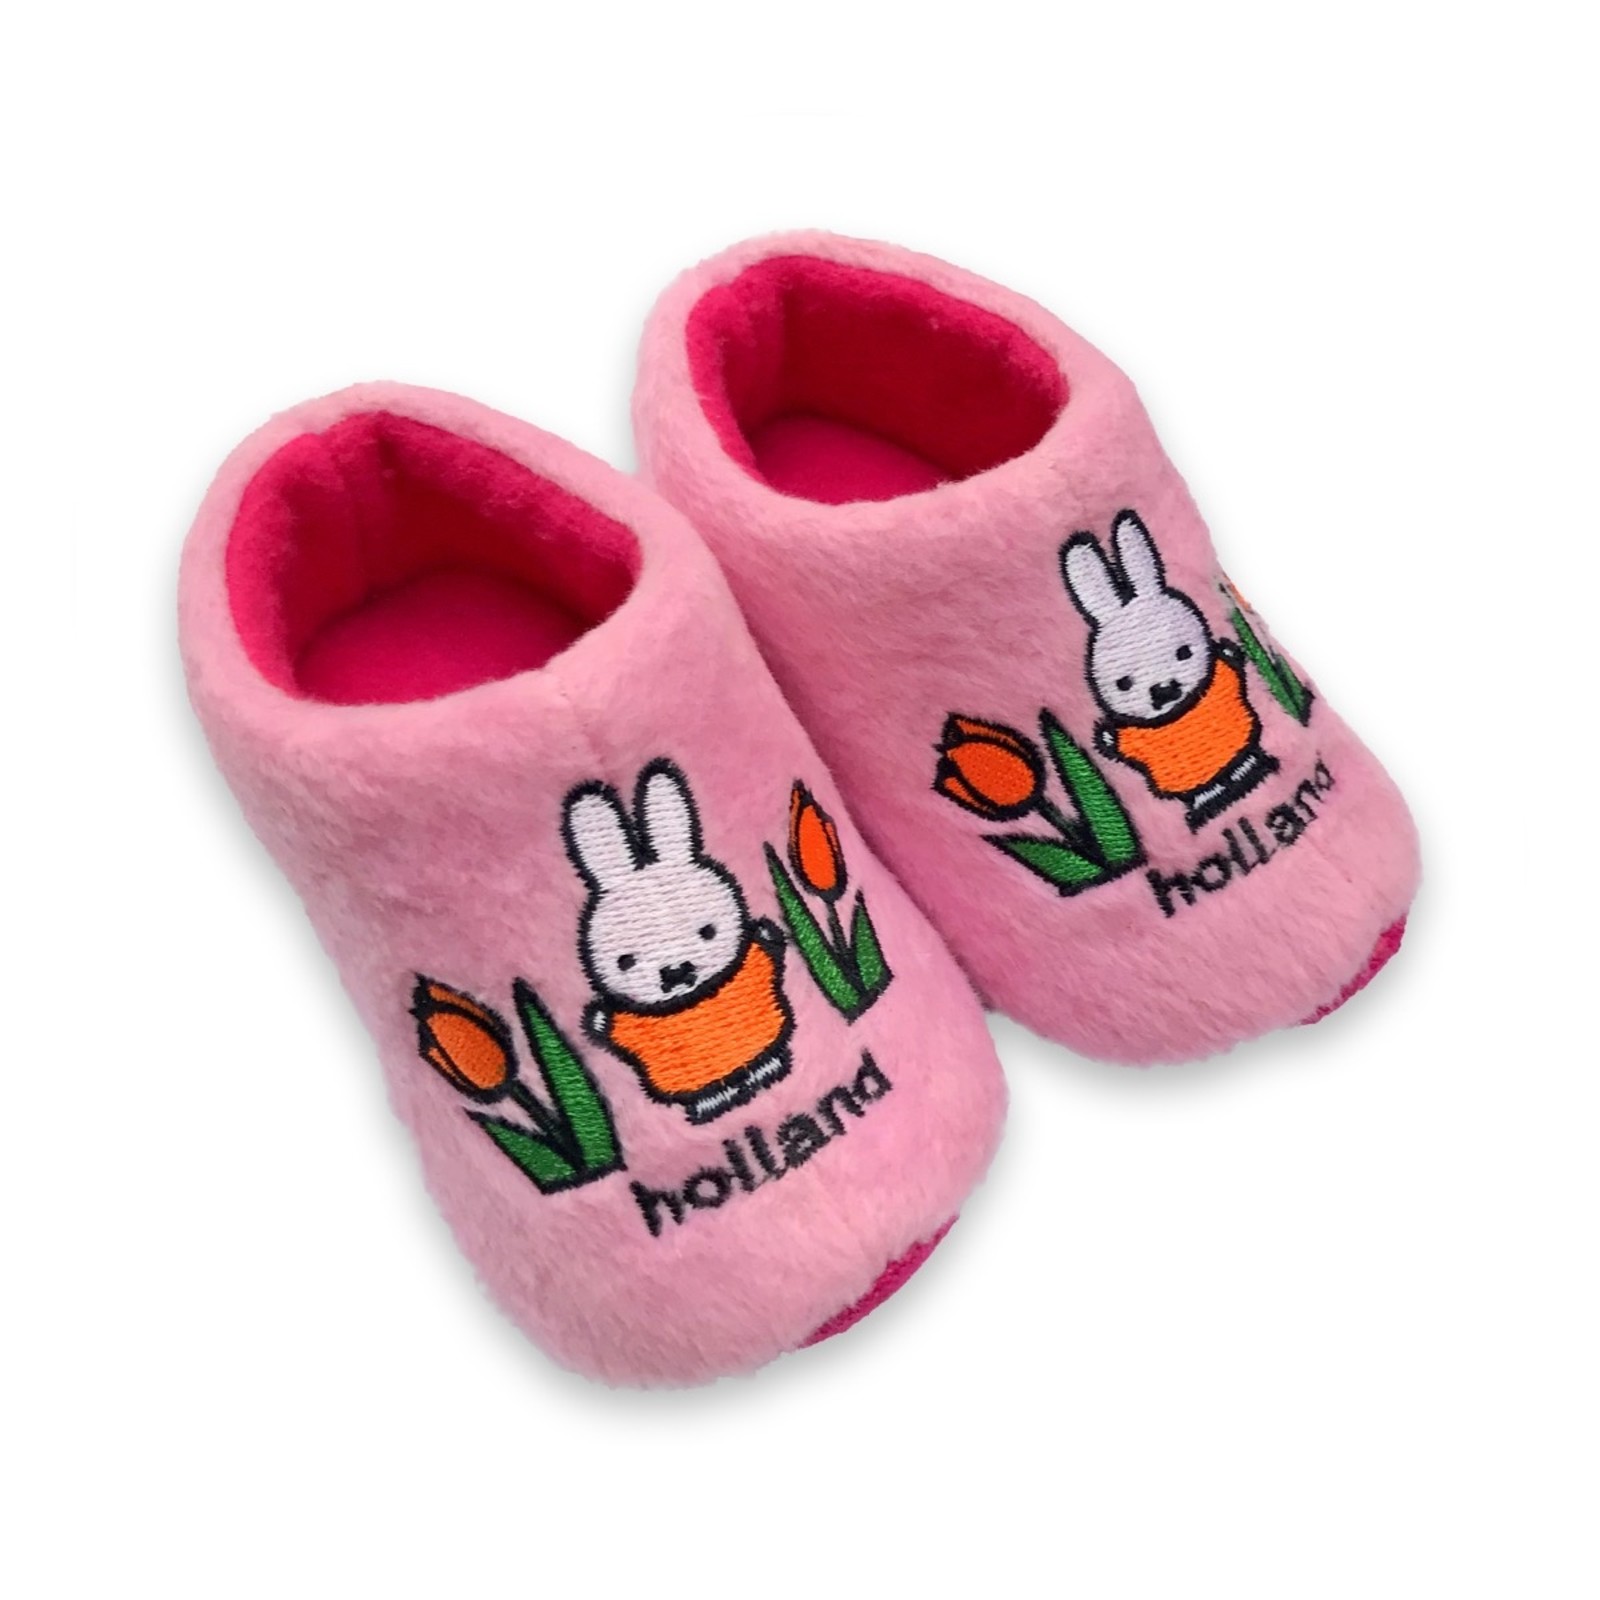 Soft clog slippers miffy holland pink EU size 0-6 months